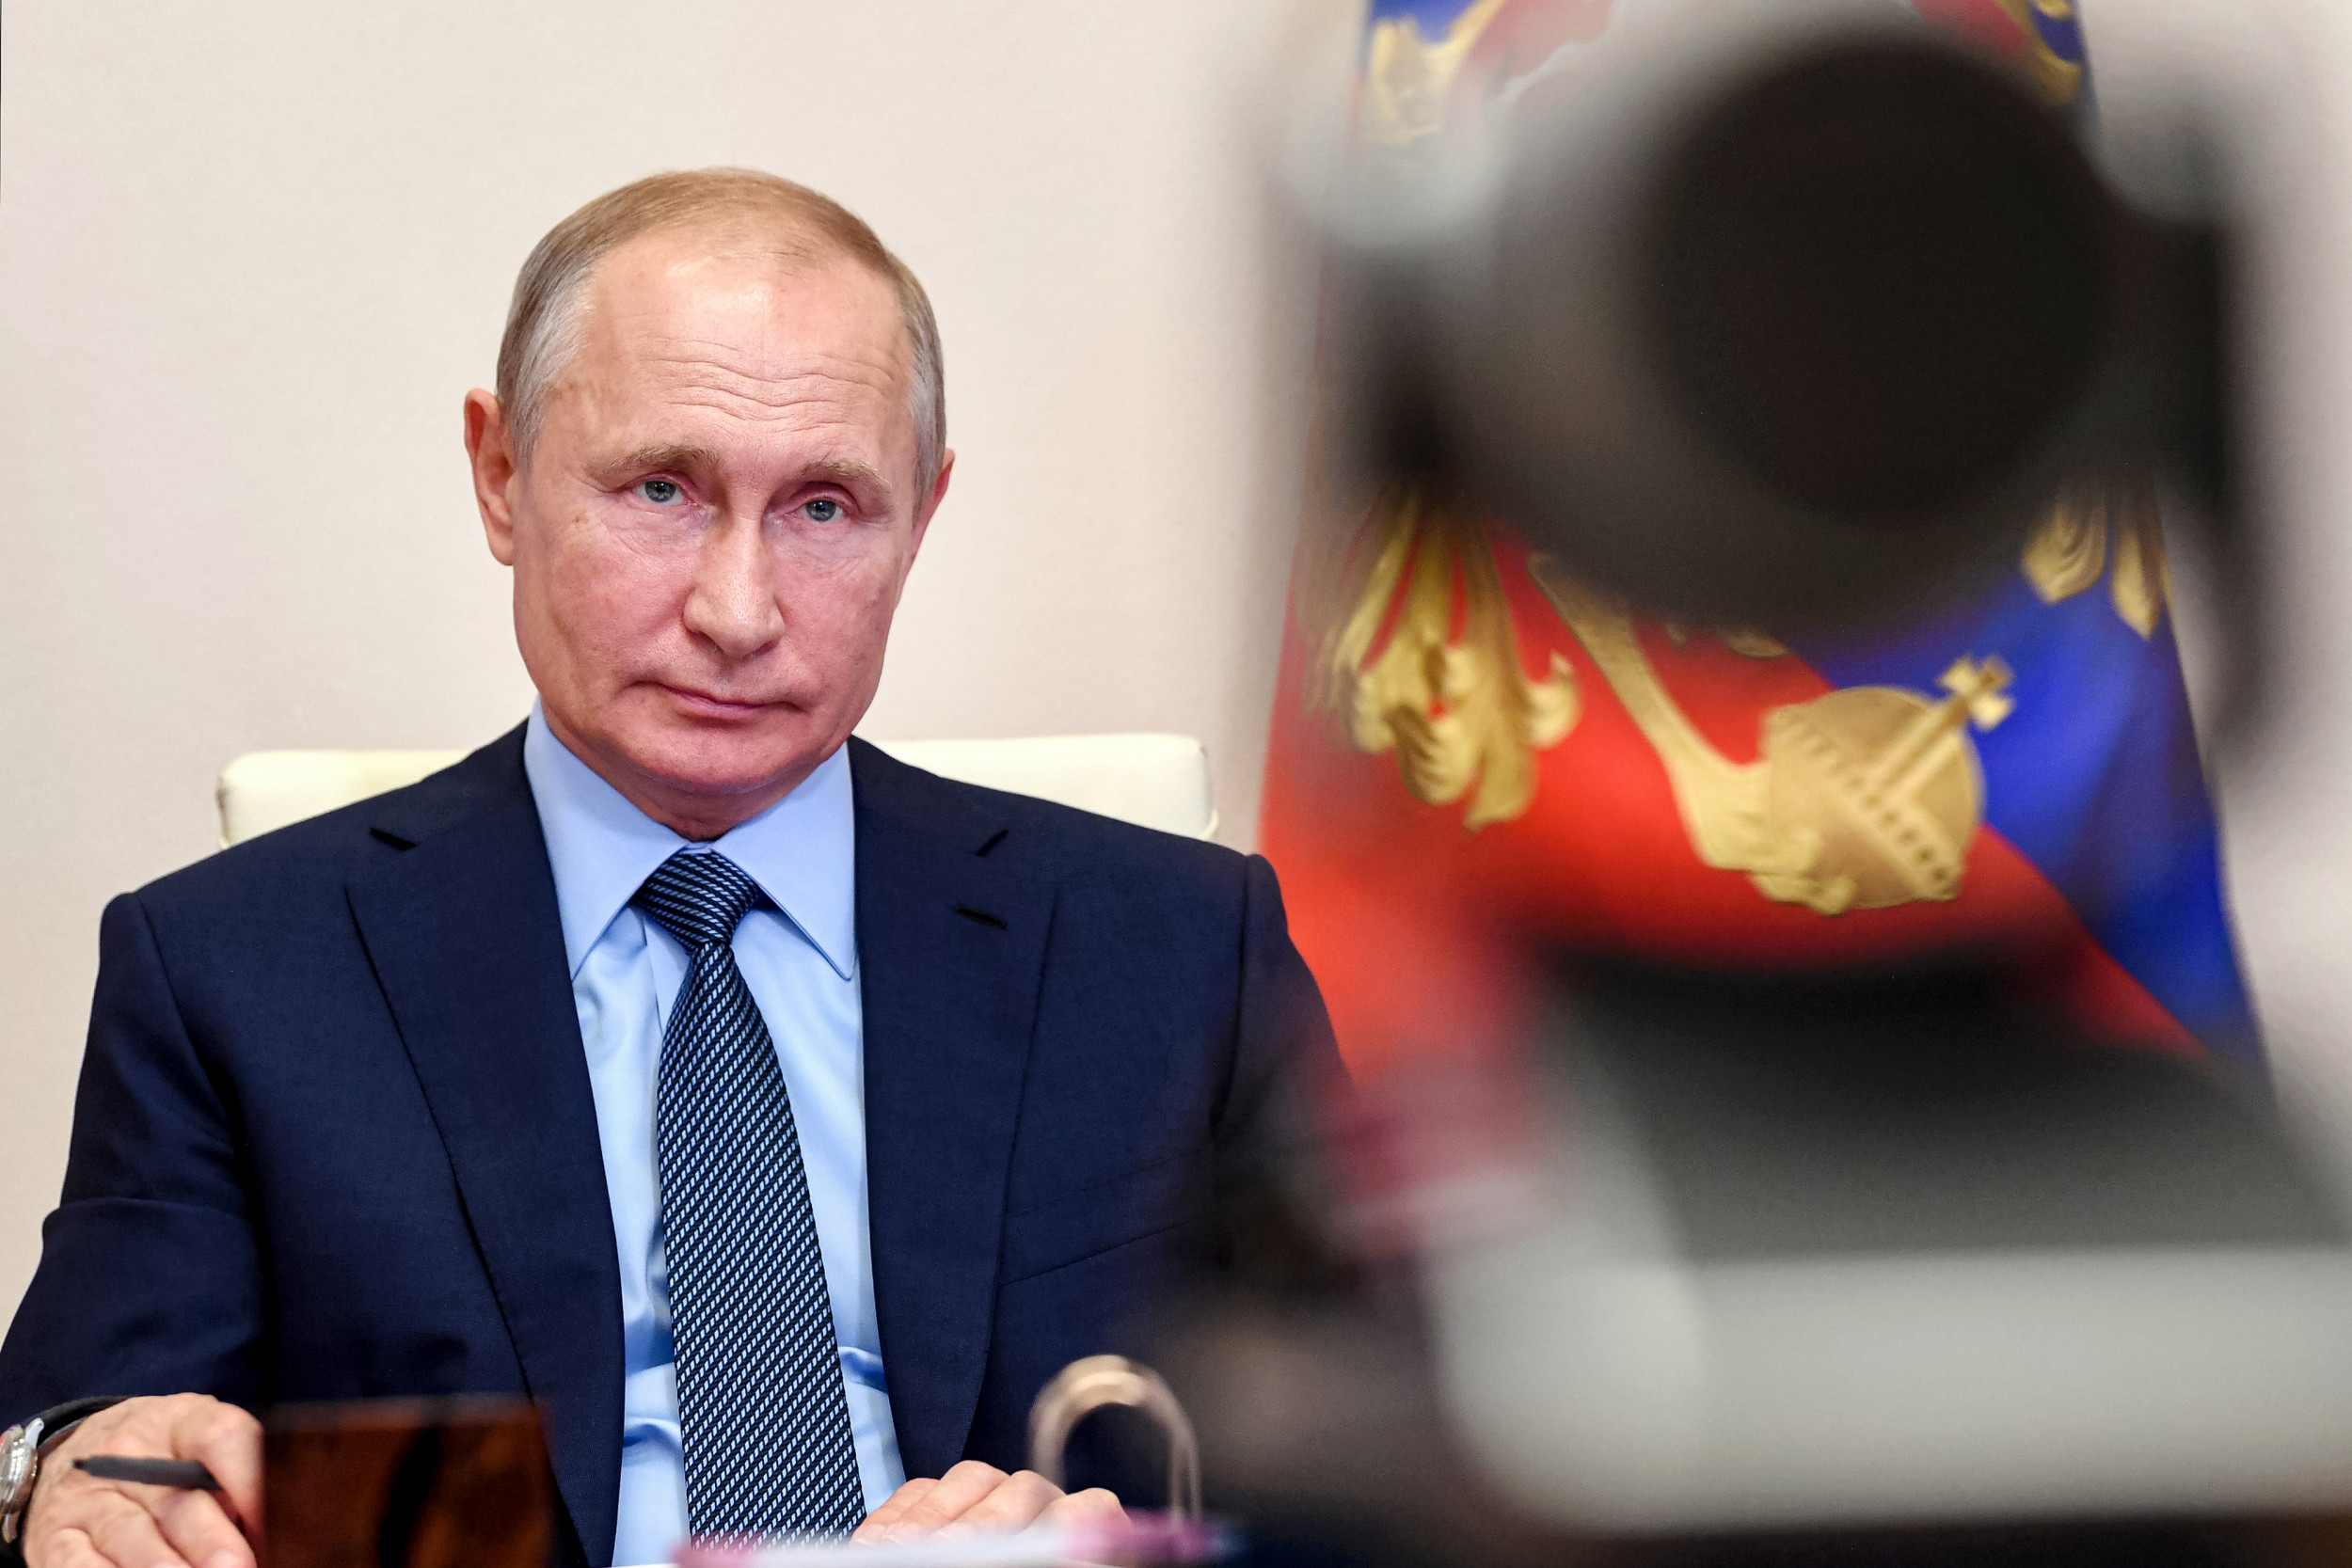 Putin Worries U.S. Protests Threaten Russia's Deals With Washington: Peskov